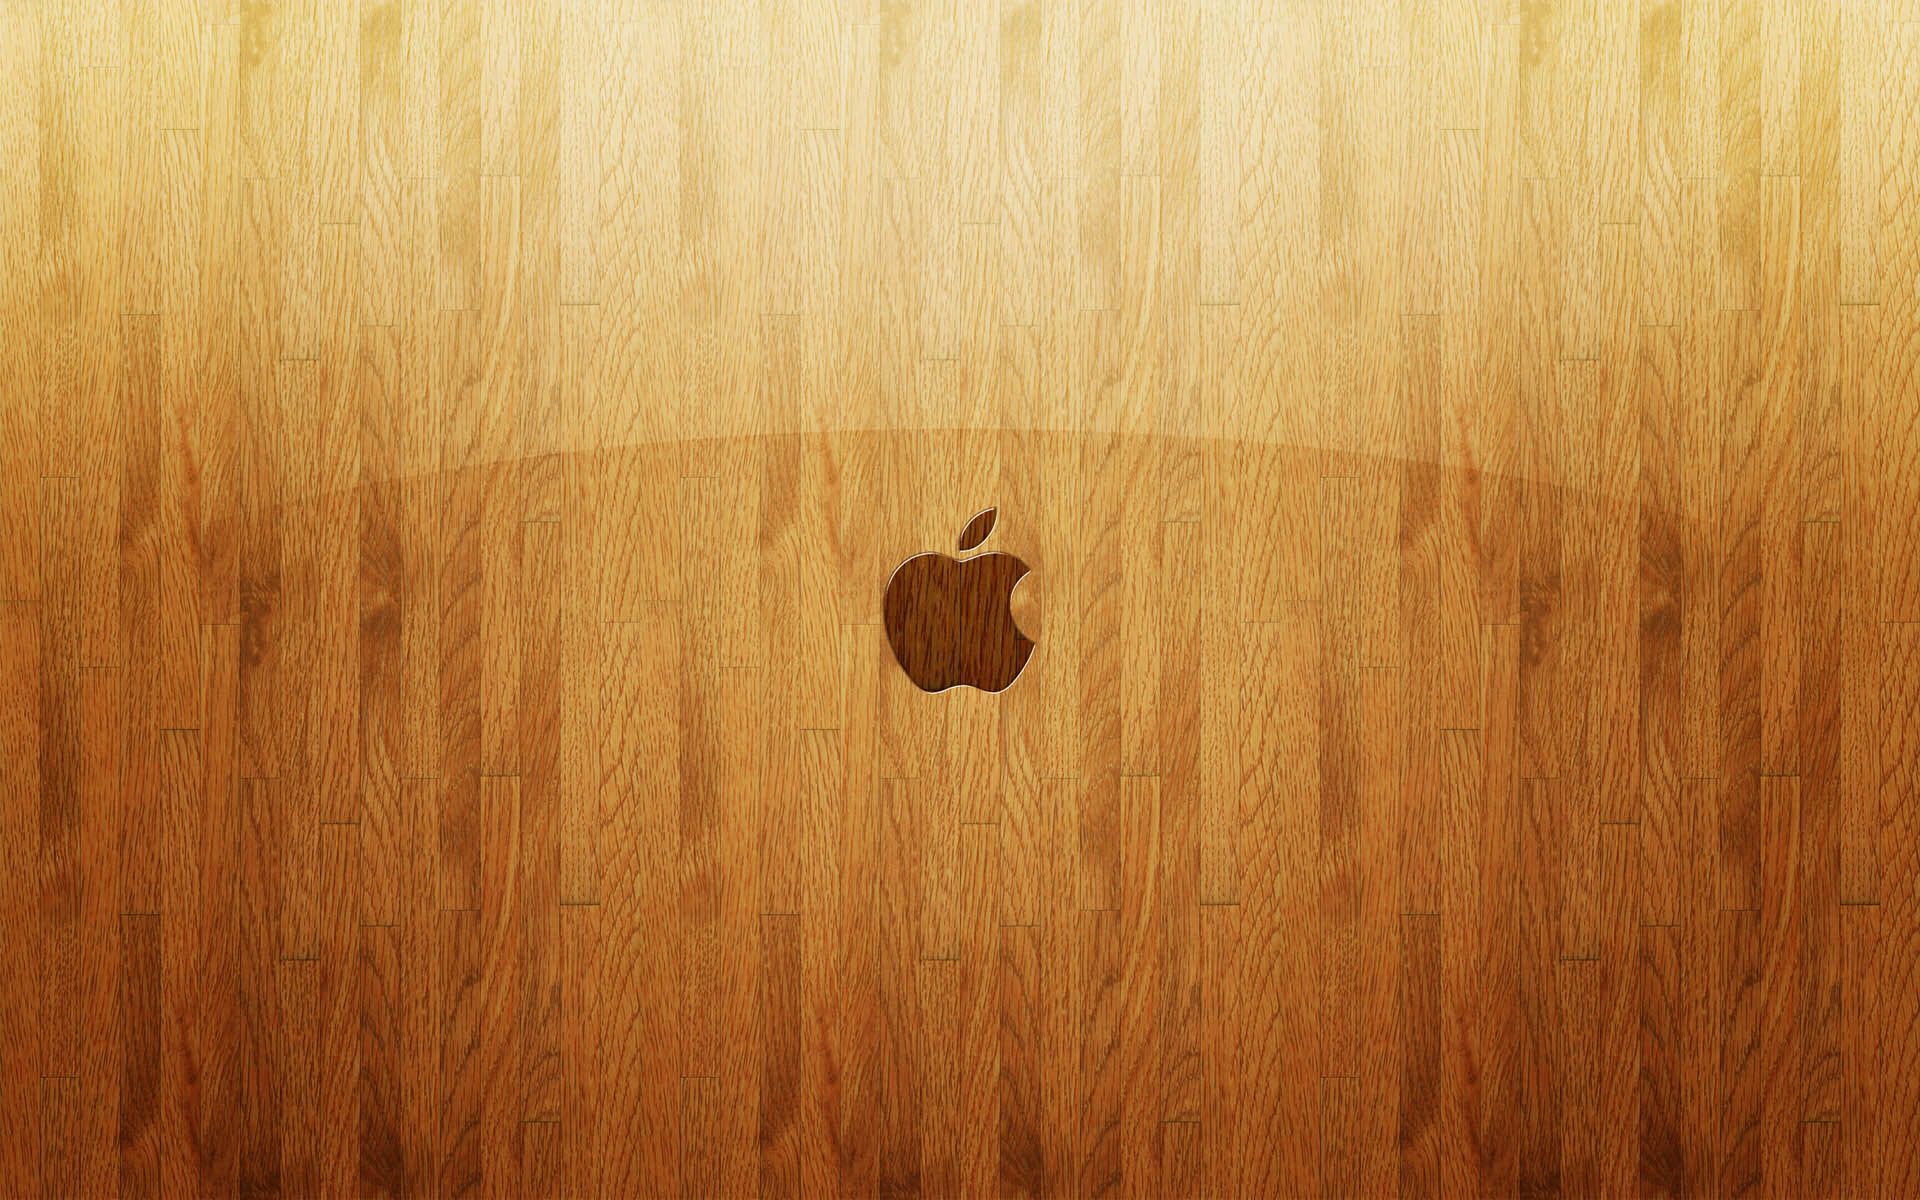 apple wallpaper STAY002 | staywallpaper